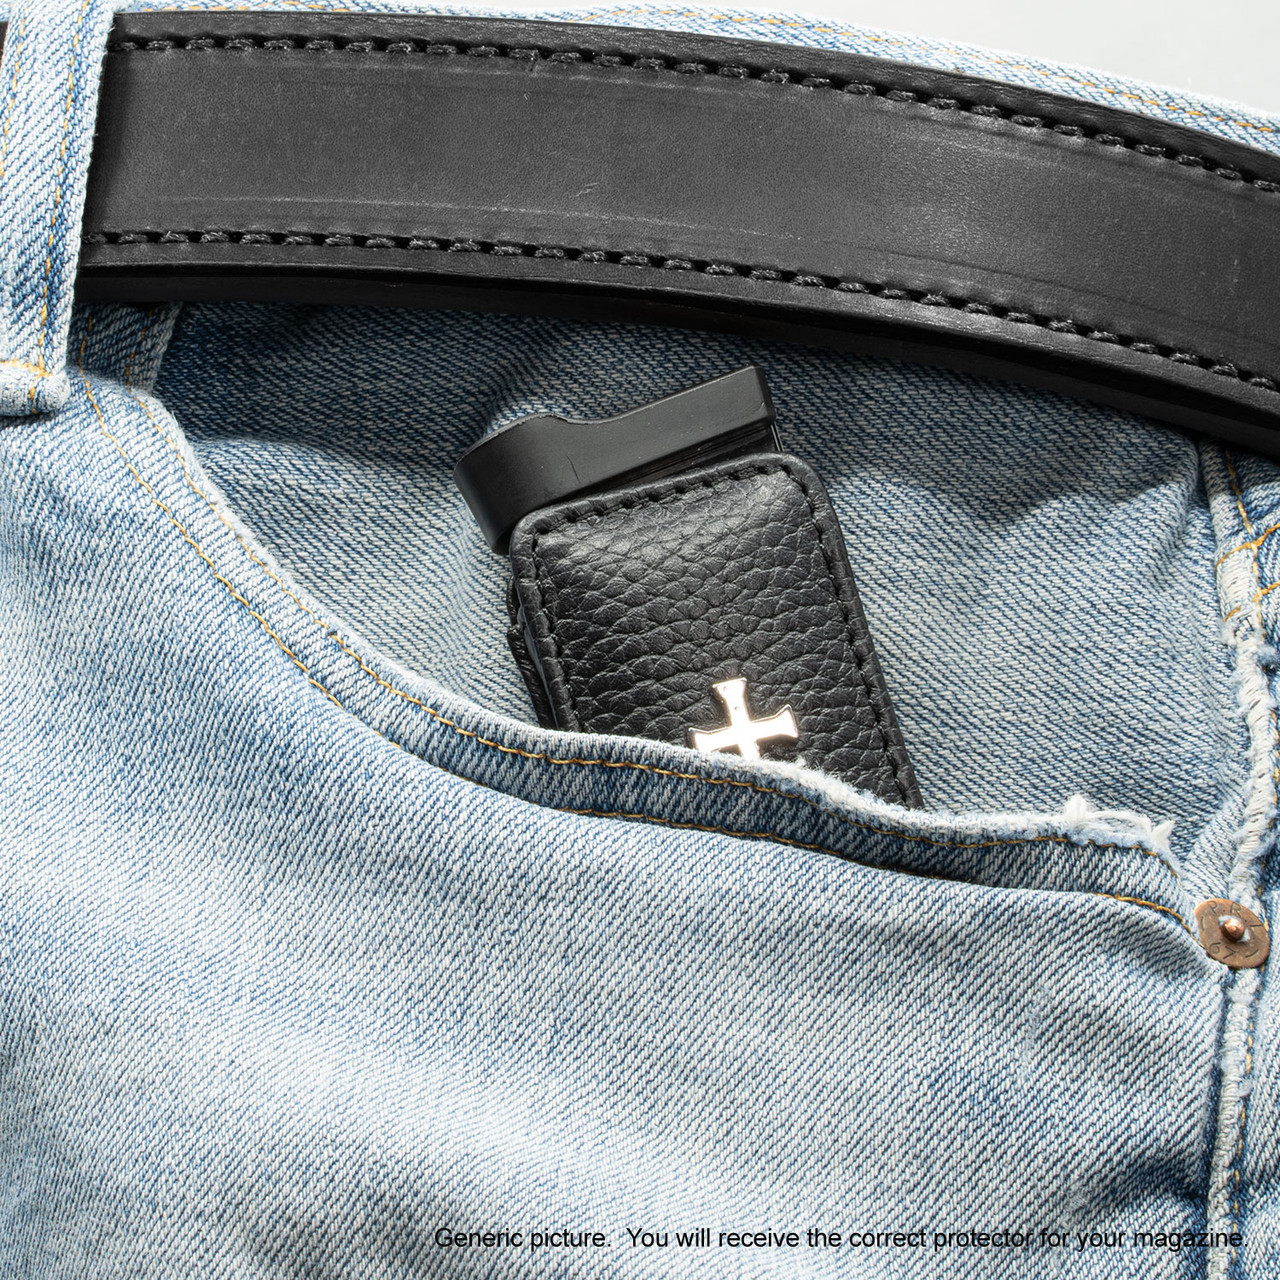 HK VP9 Black Leather Cross Magazine Pocket Protector